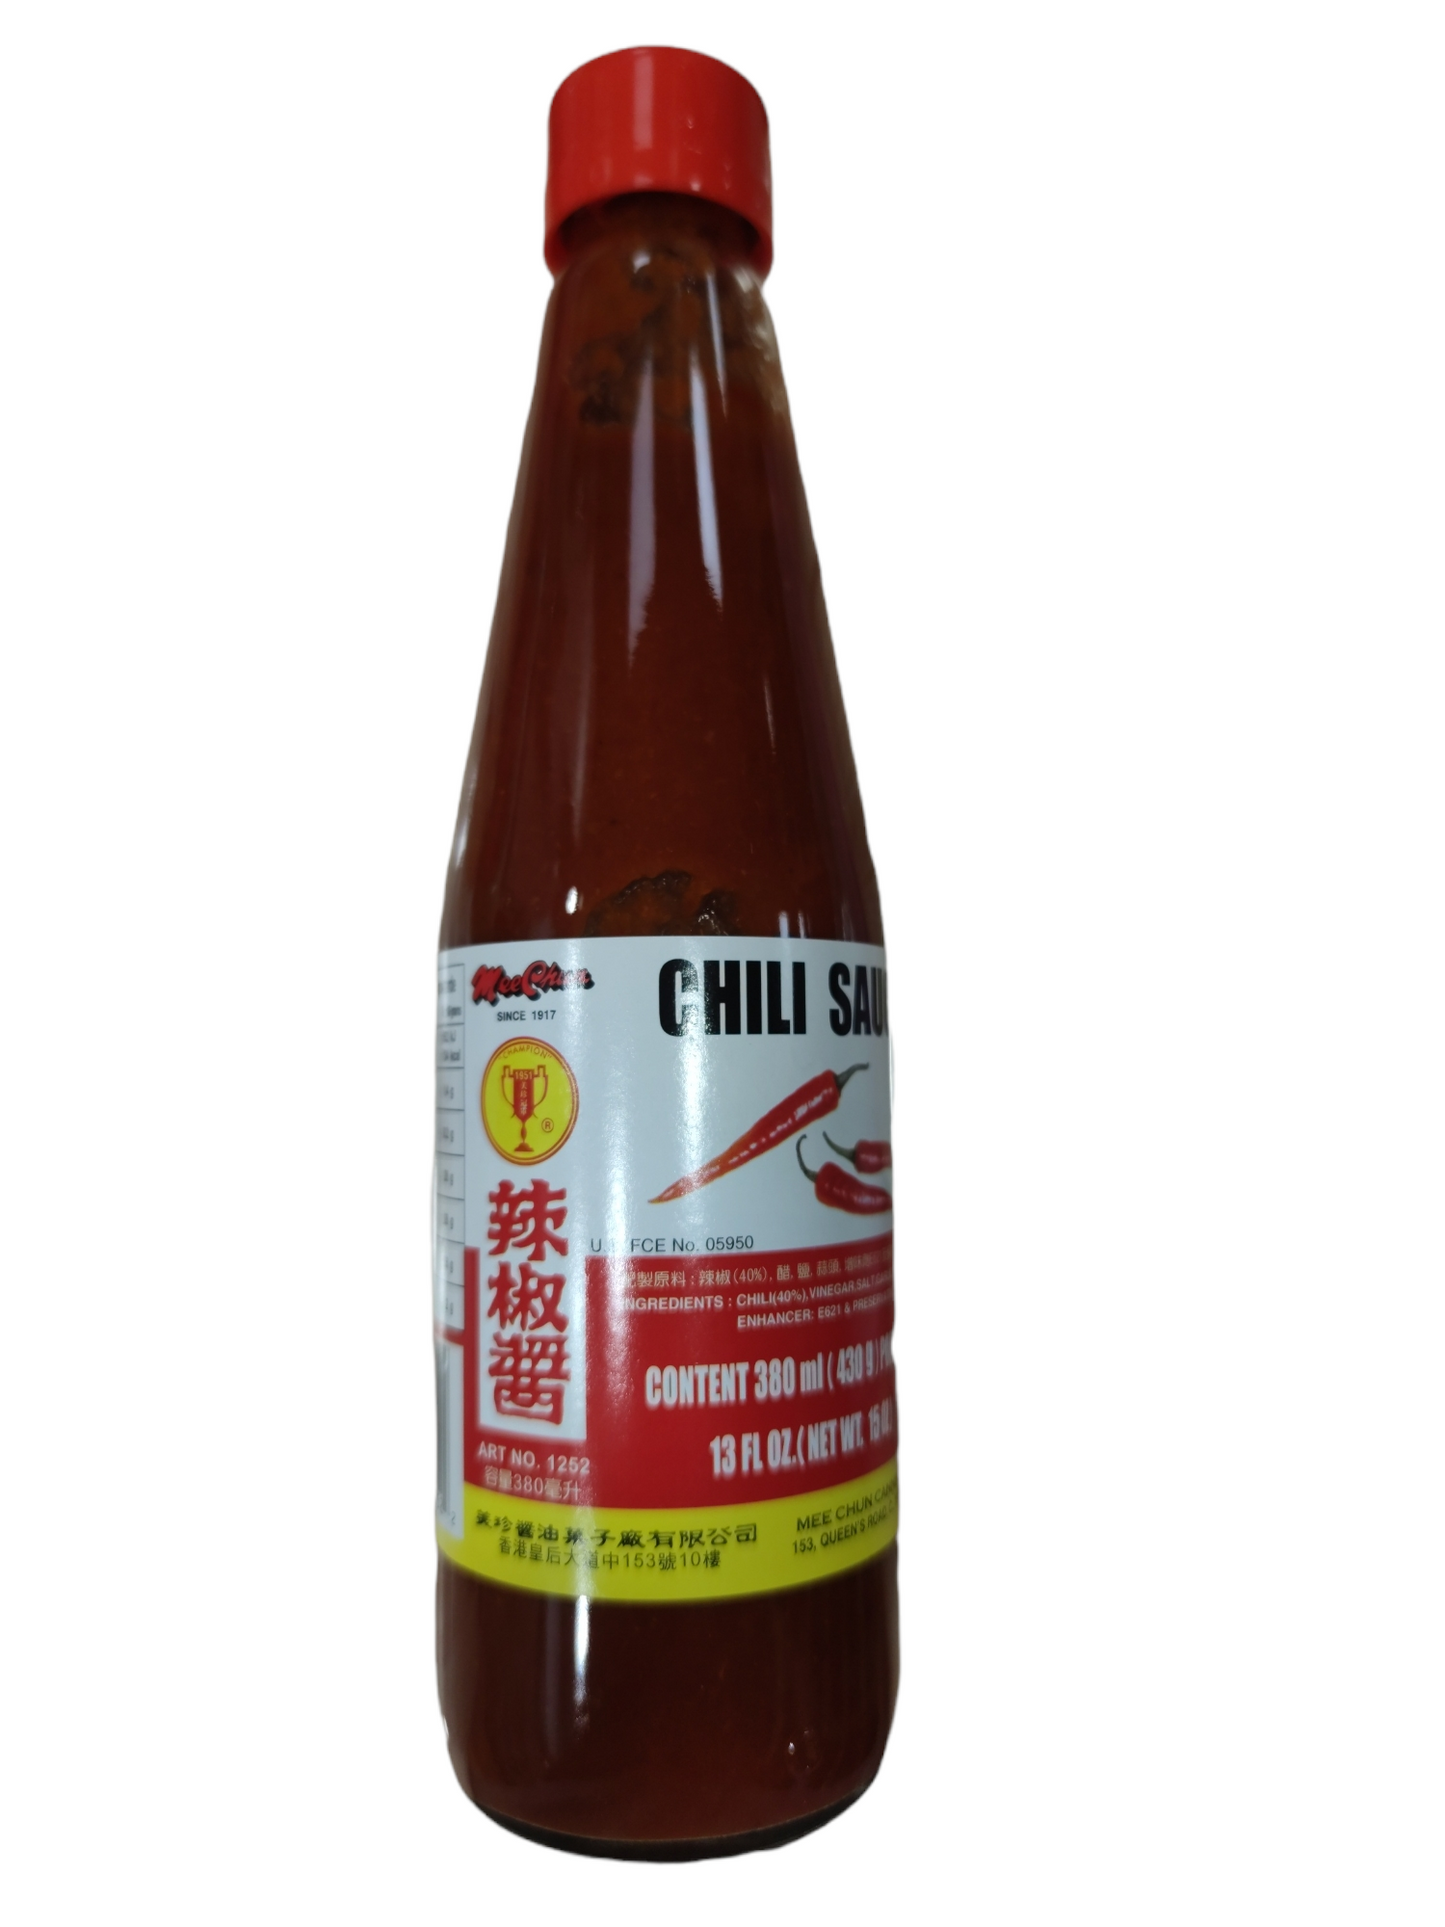 MC Chili Sauce 380ml 美珍辣椒醬